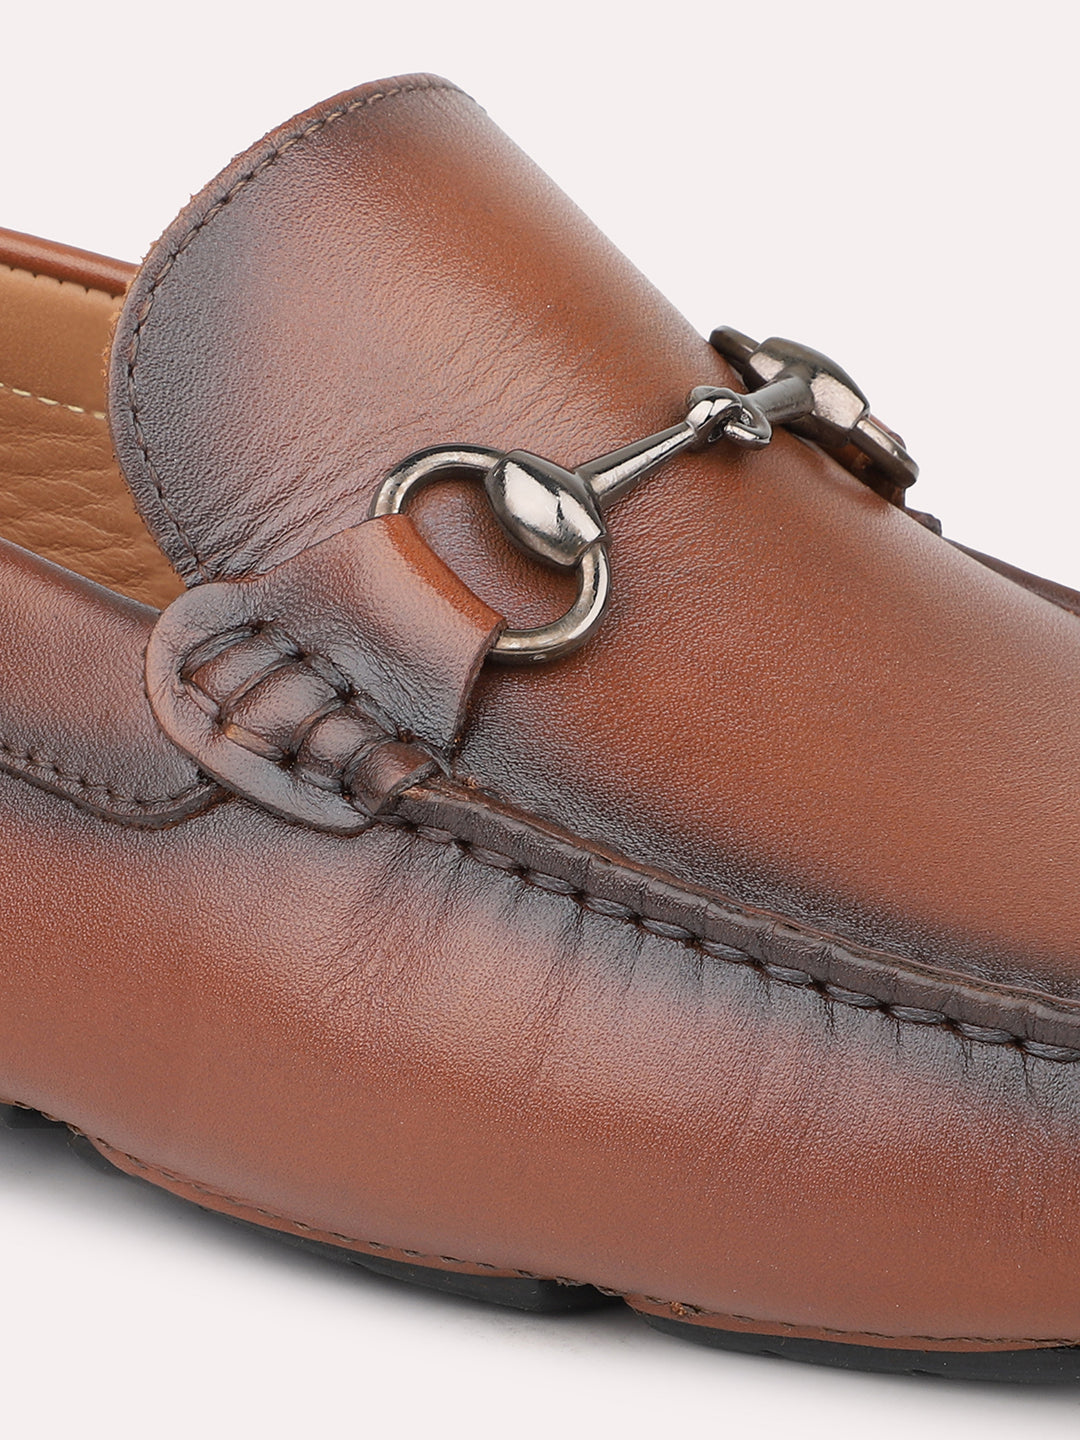 Atesber Brown Loafer Driving Shoes For Men